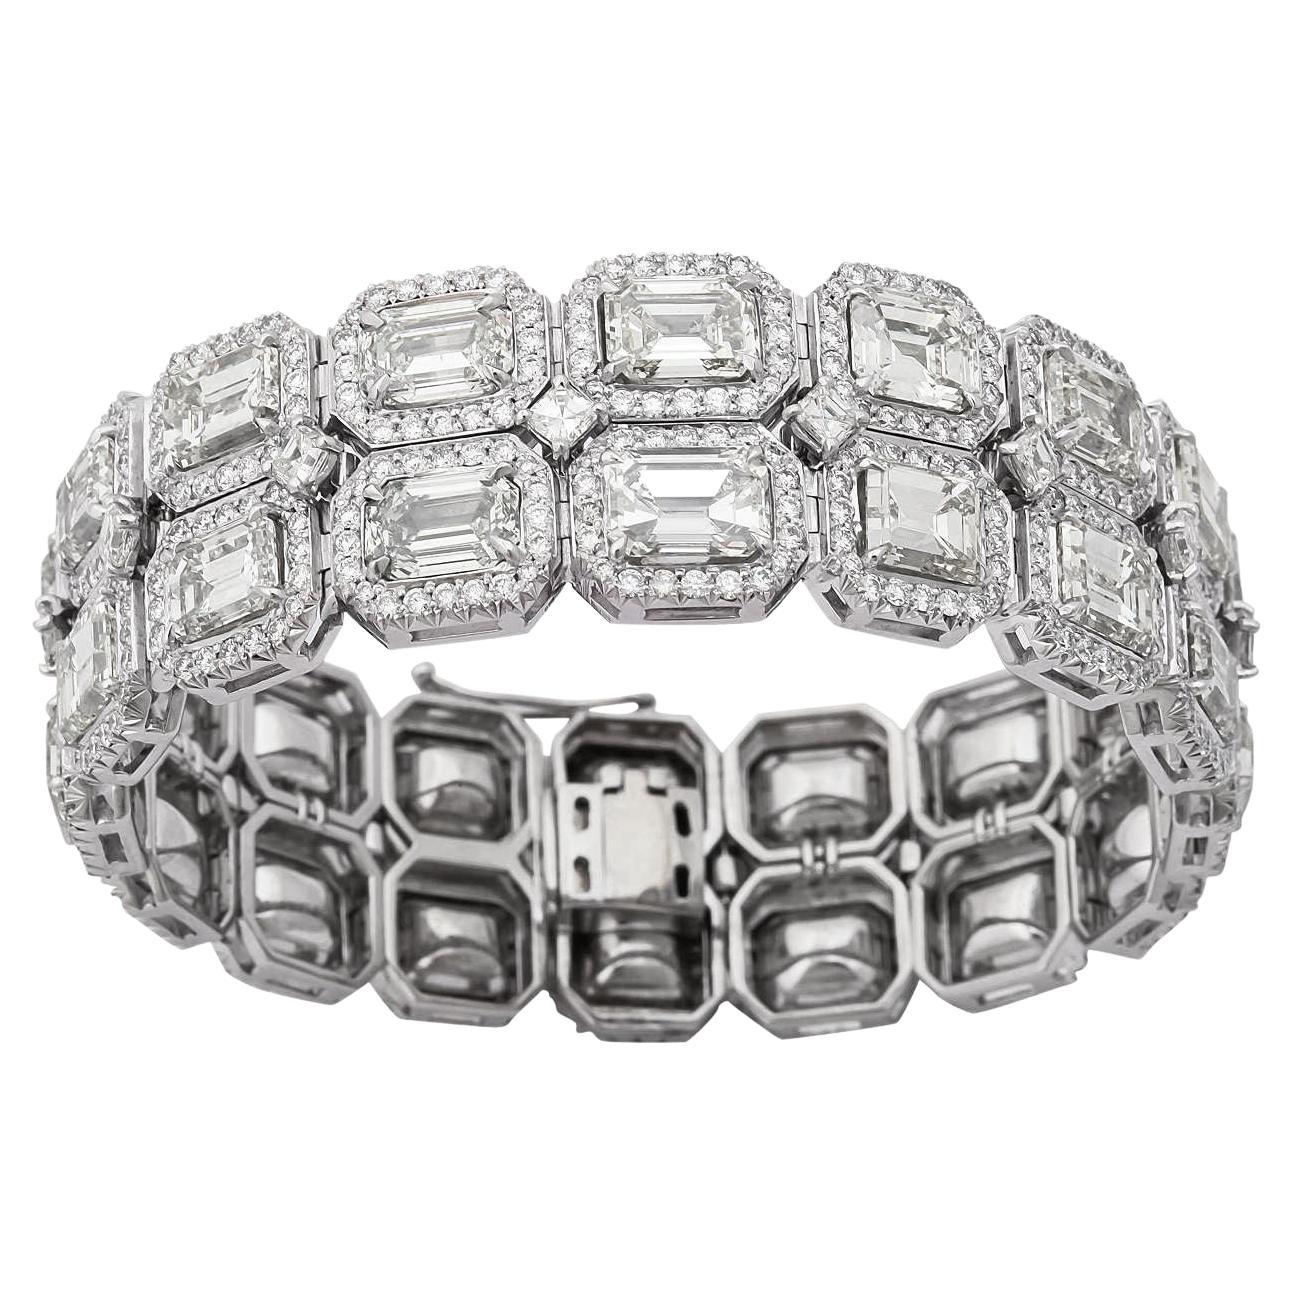 Diana M. Platinum diamond bracelet featuring 50cts of emerald cut diamonds 